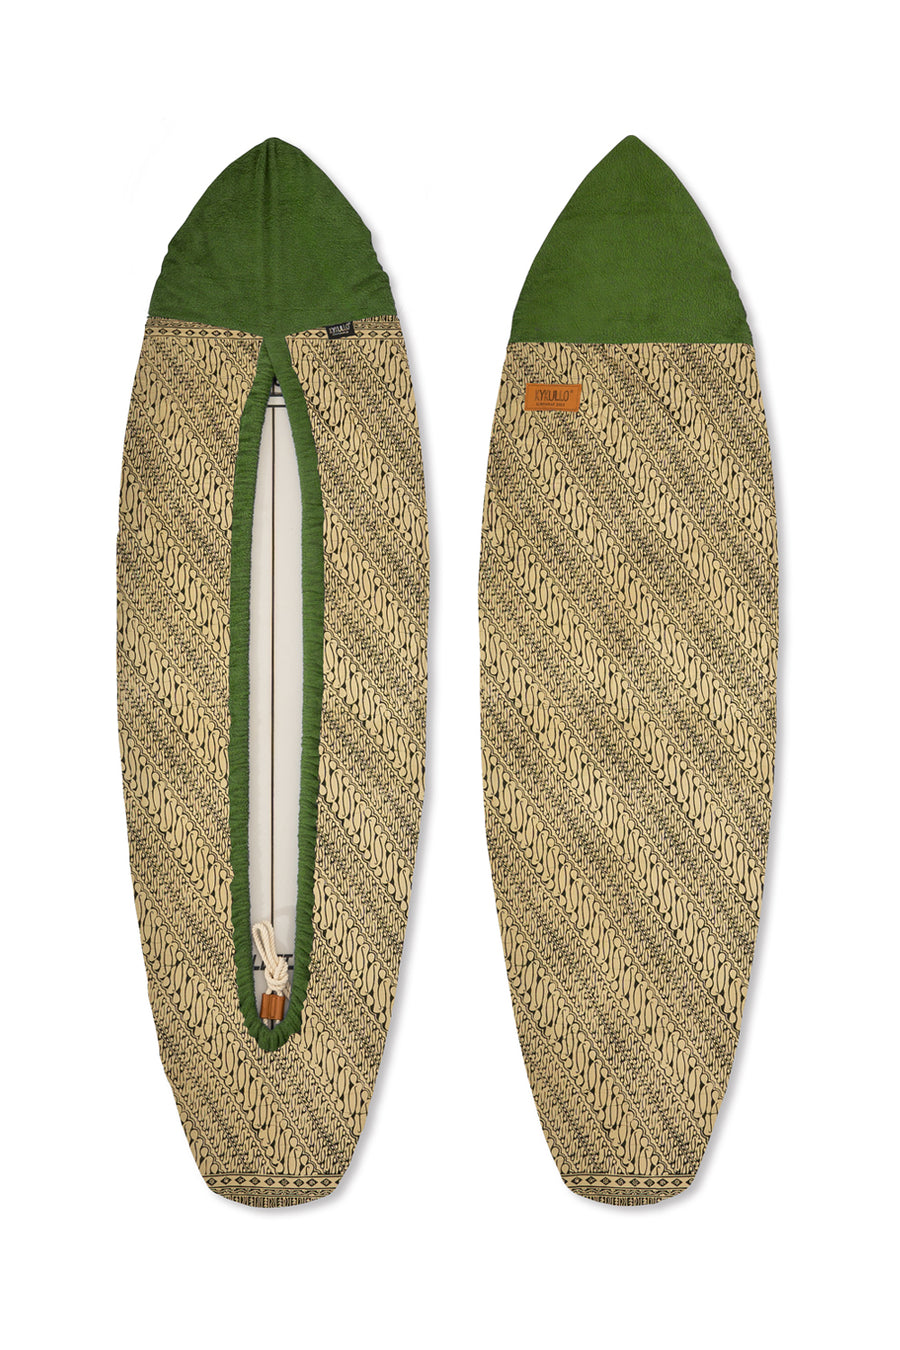 SURFWRAP 6'4 -OLIVE (RETAIL)